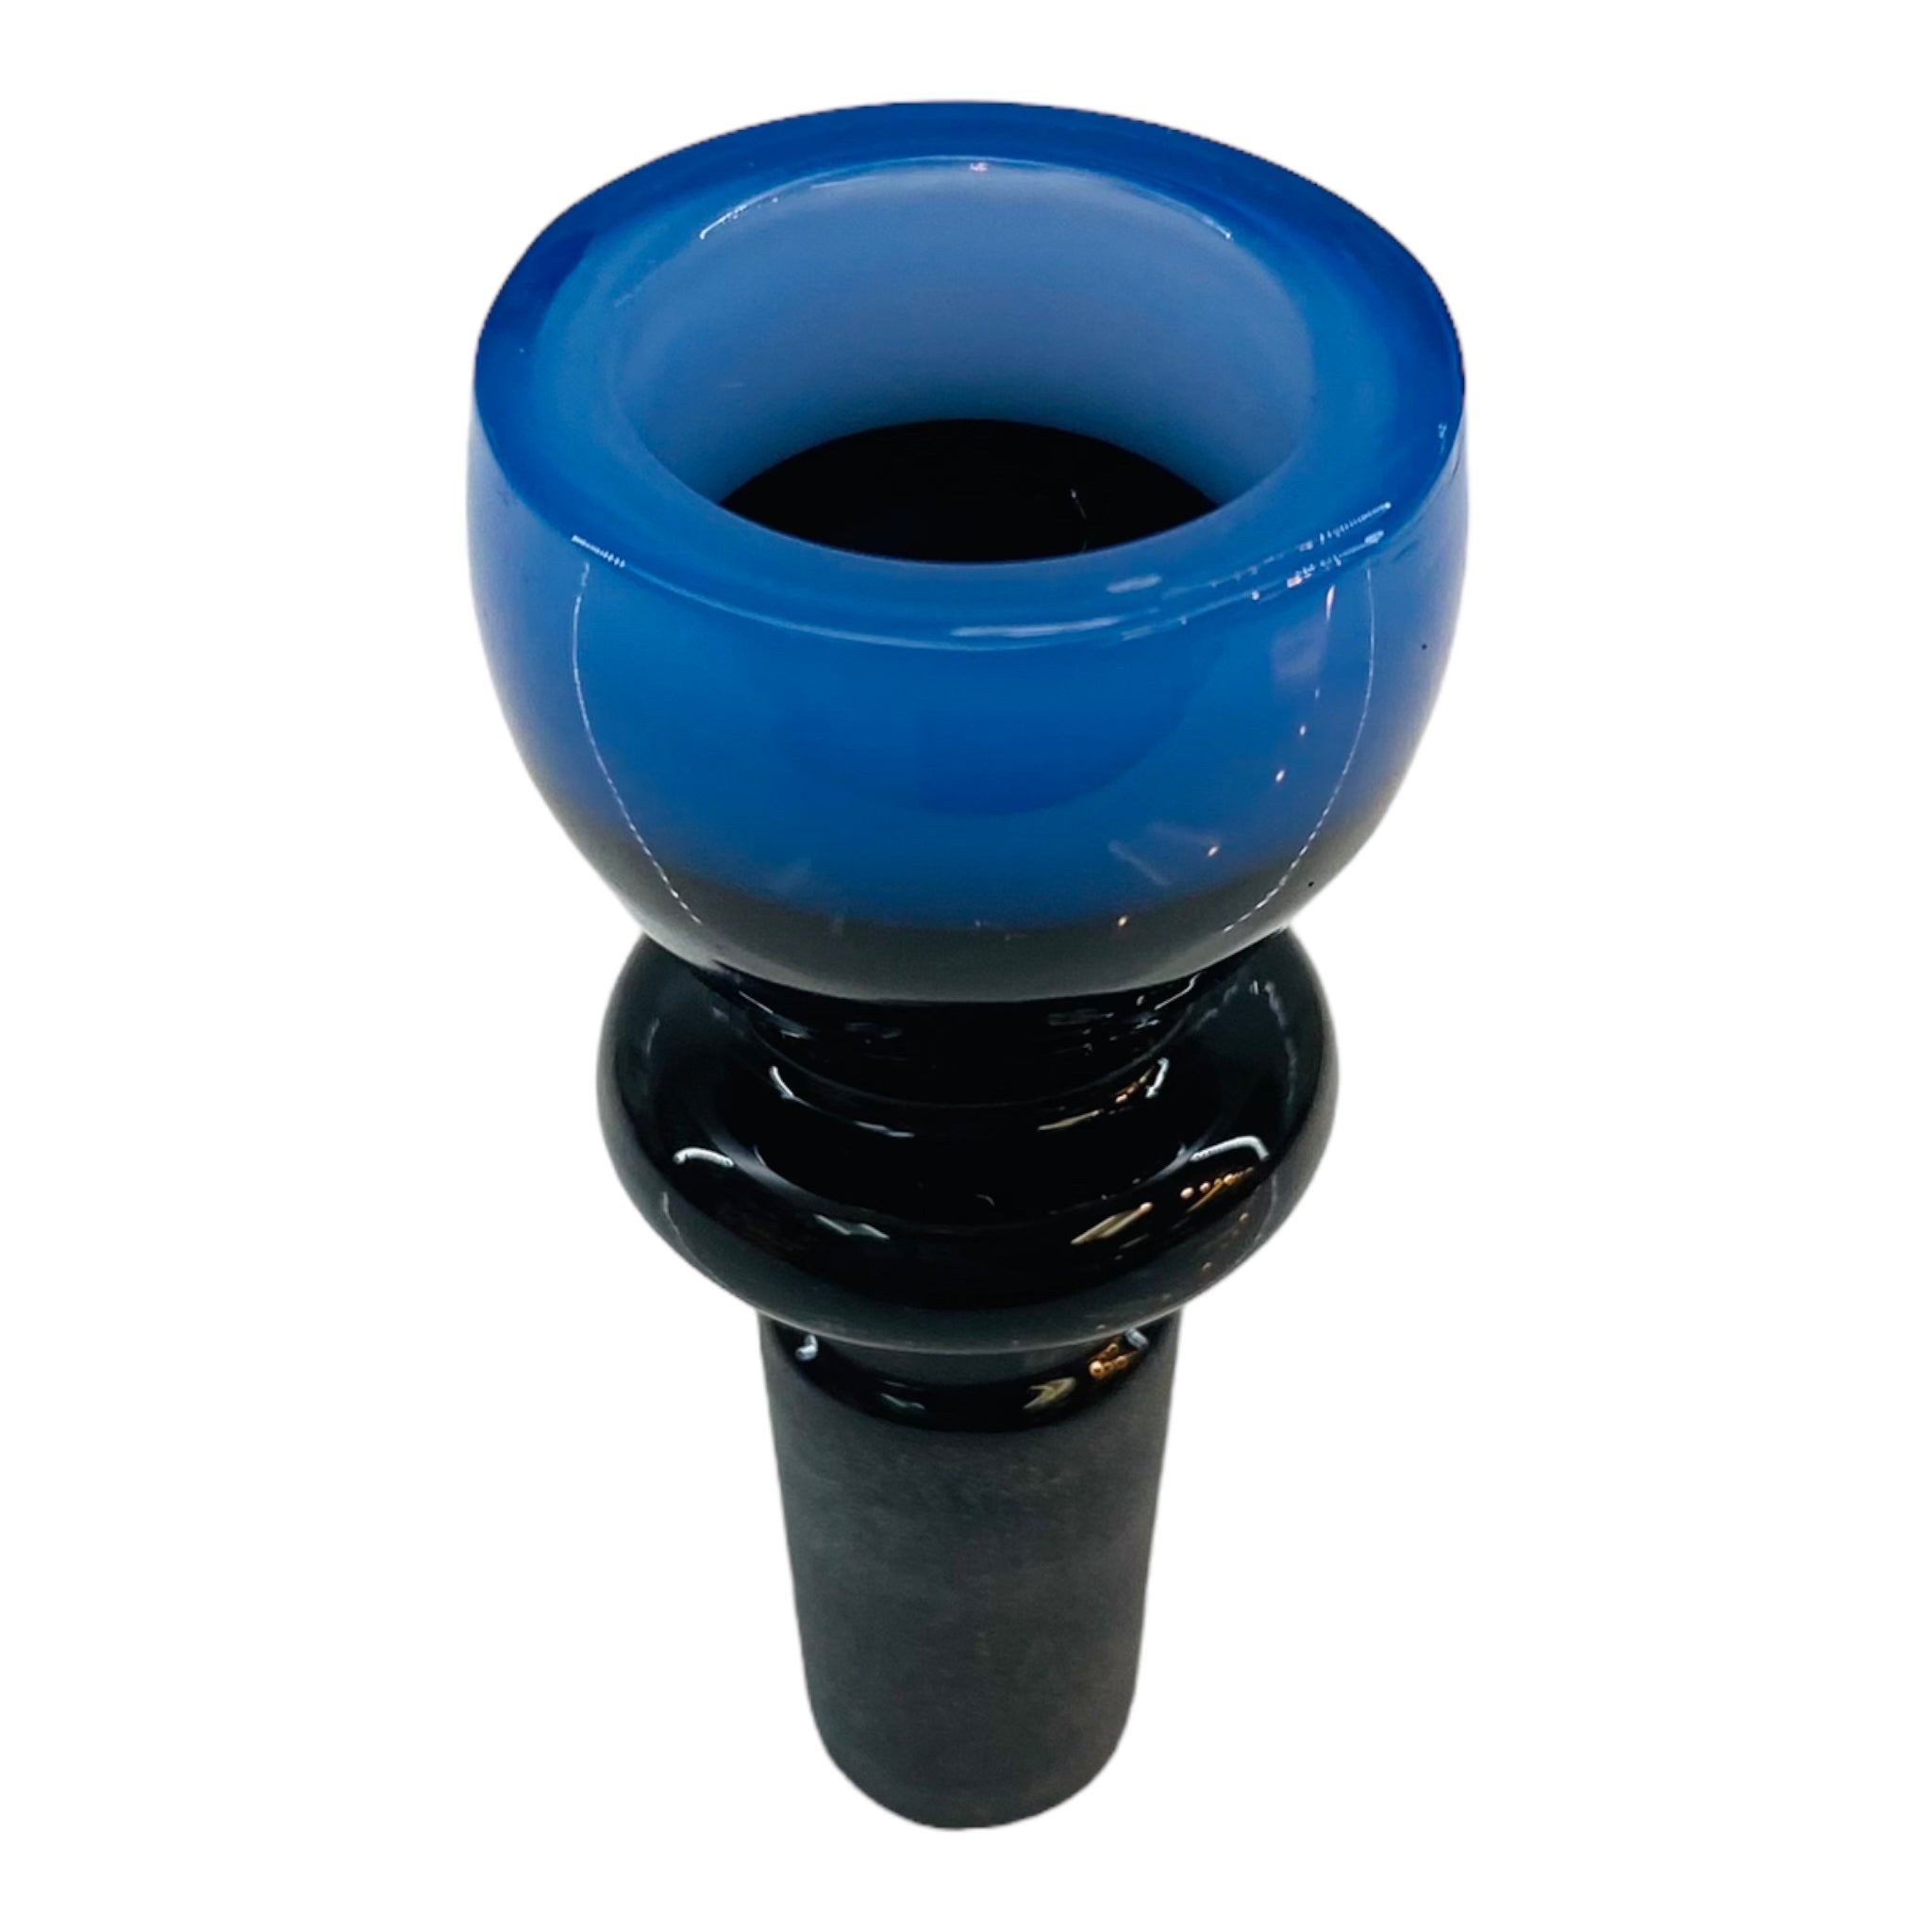 14mm Flower Bowl - Black Fitting With Color Rim - Blue